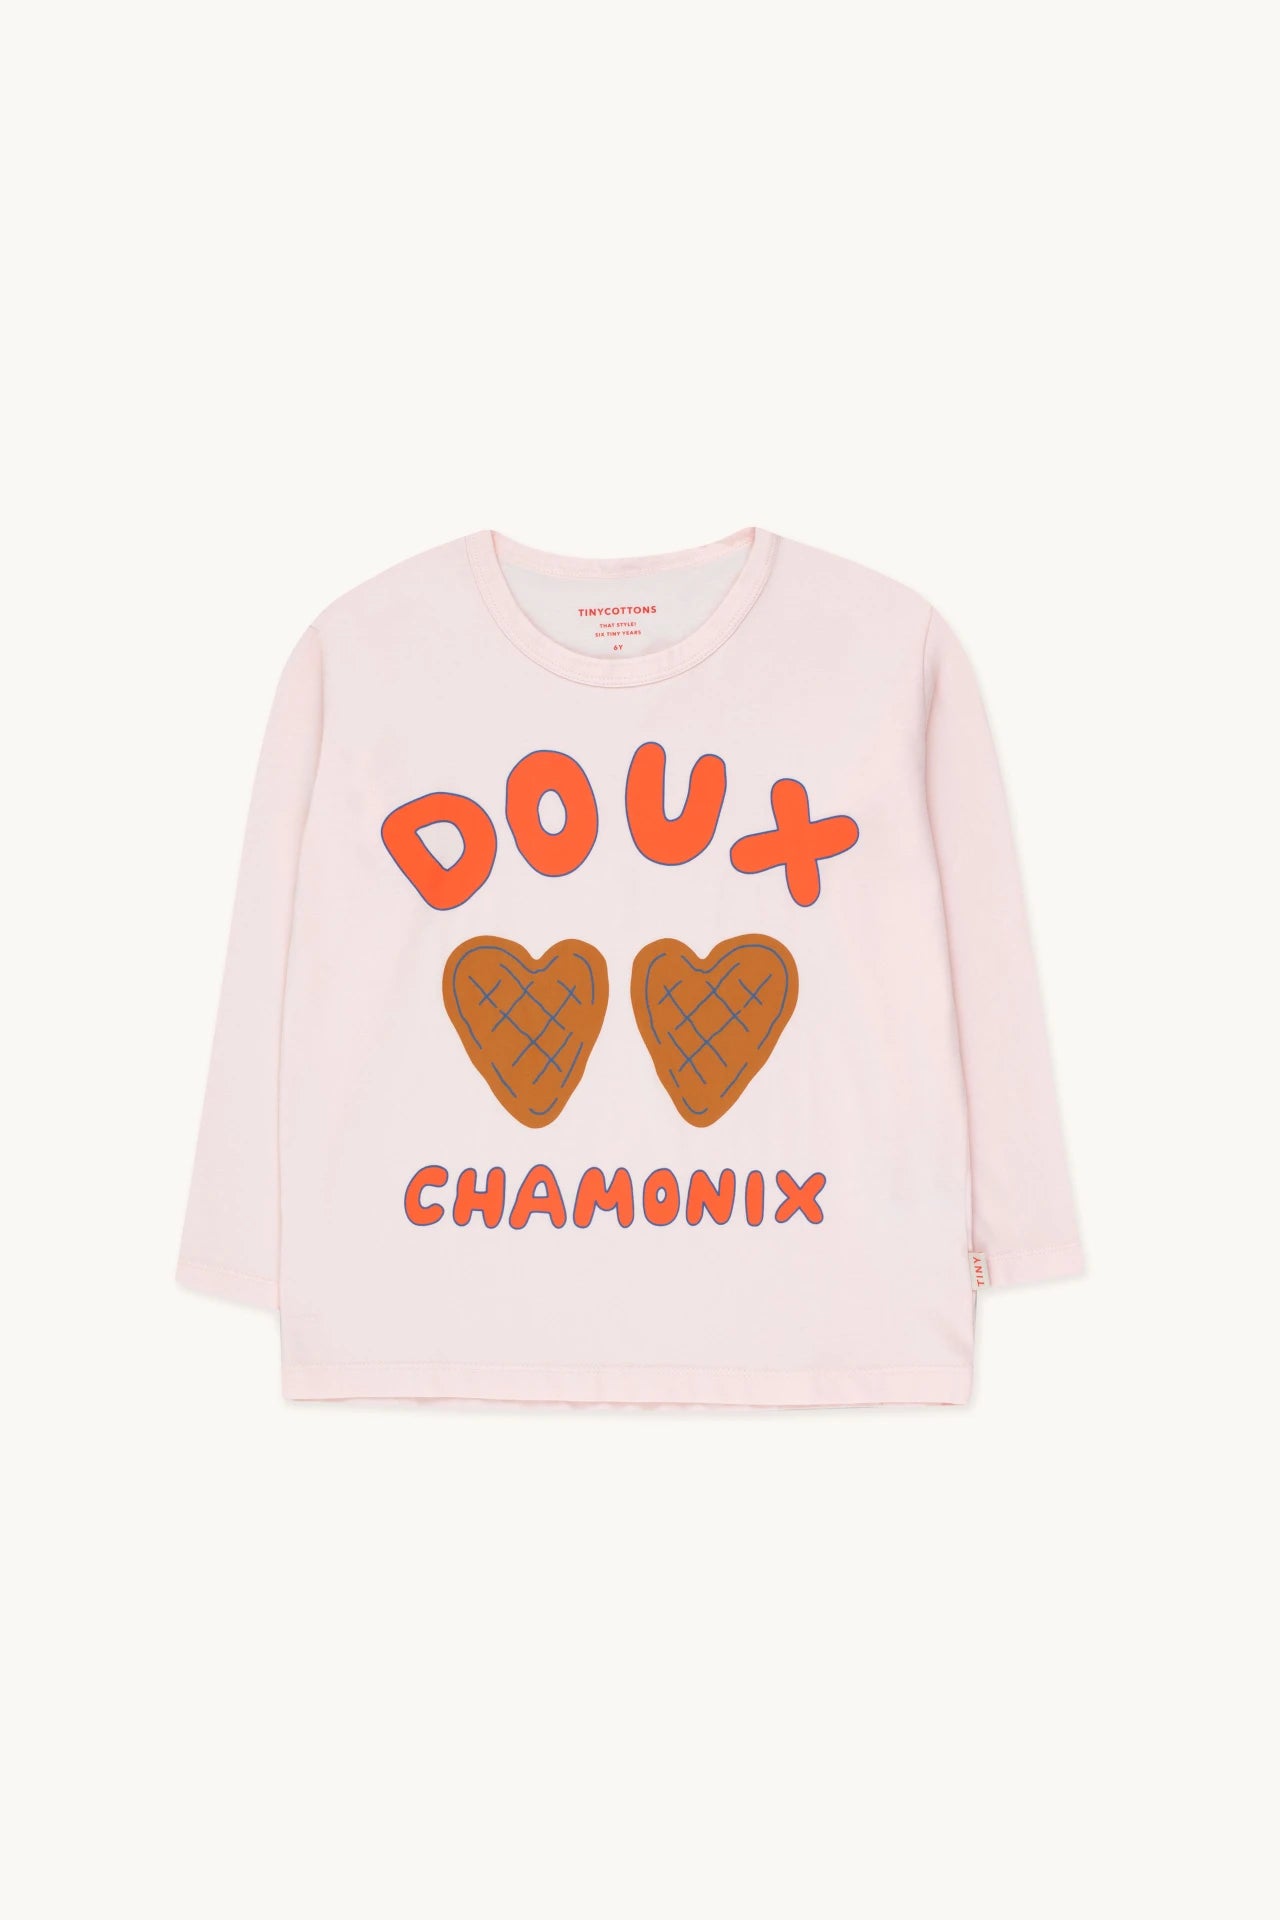 Tiny Cottons Doux Chamonix Tee - soft pink